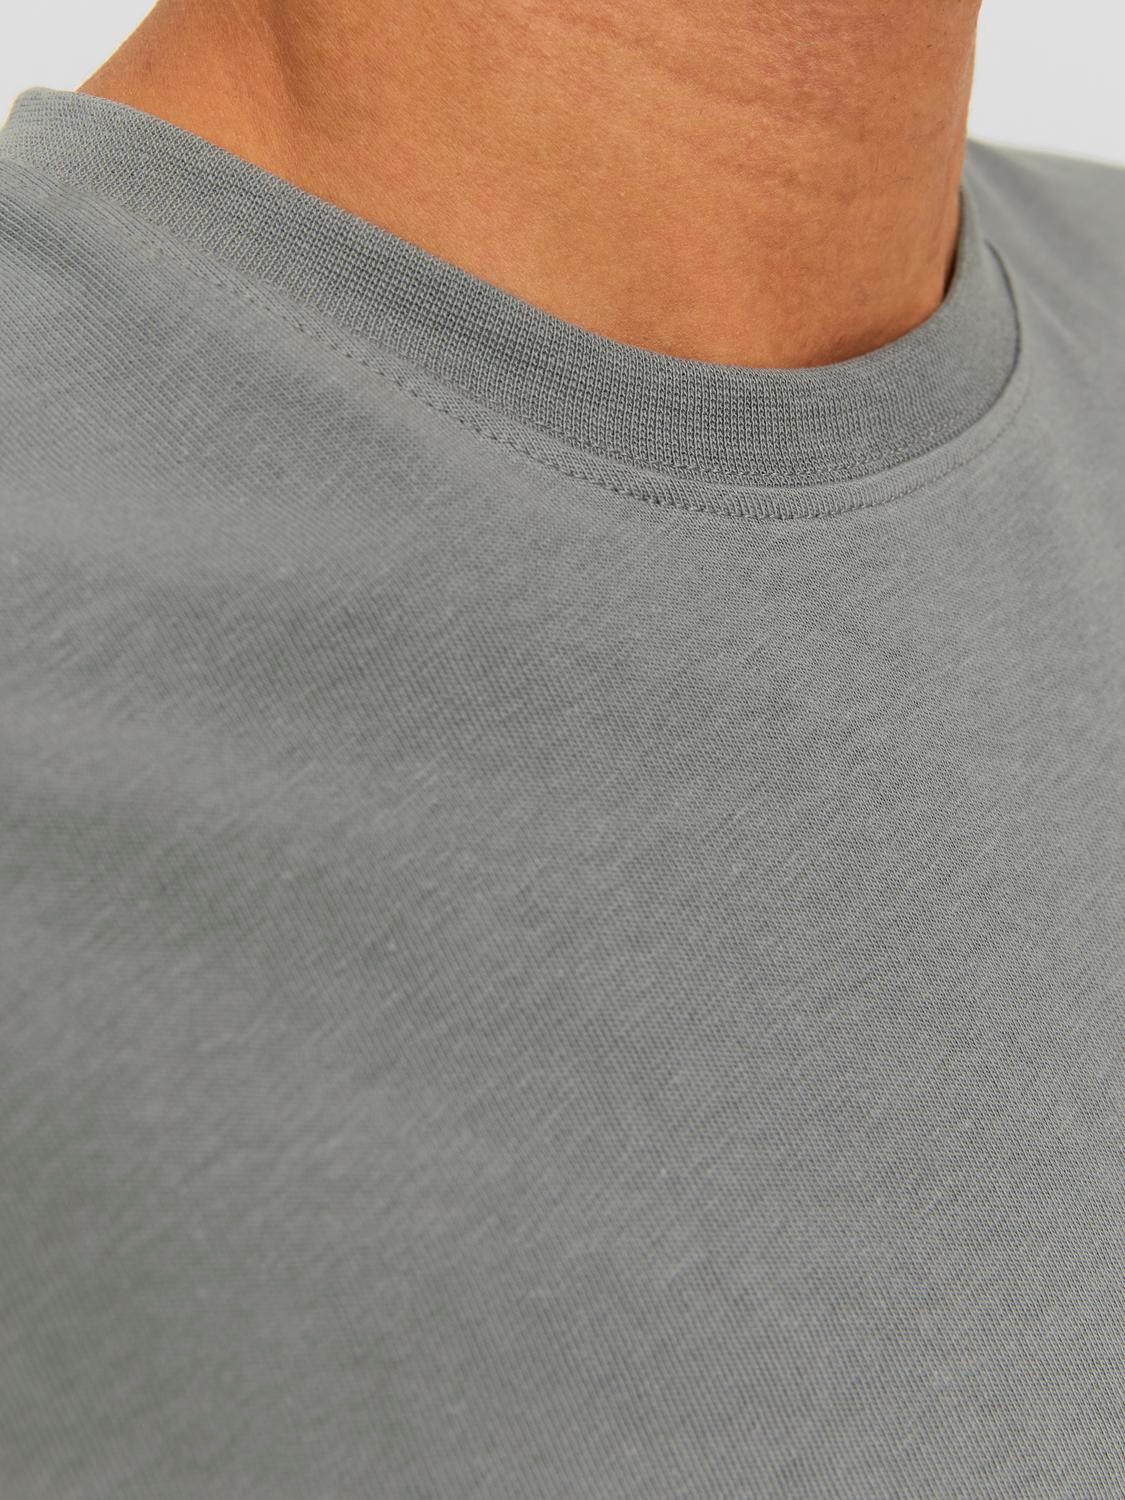 Jack & Jones Plain Crew neck T-shirt -Sedona Sage - 12190467